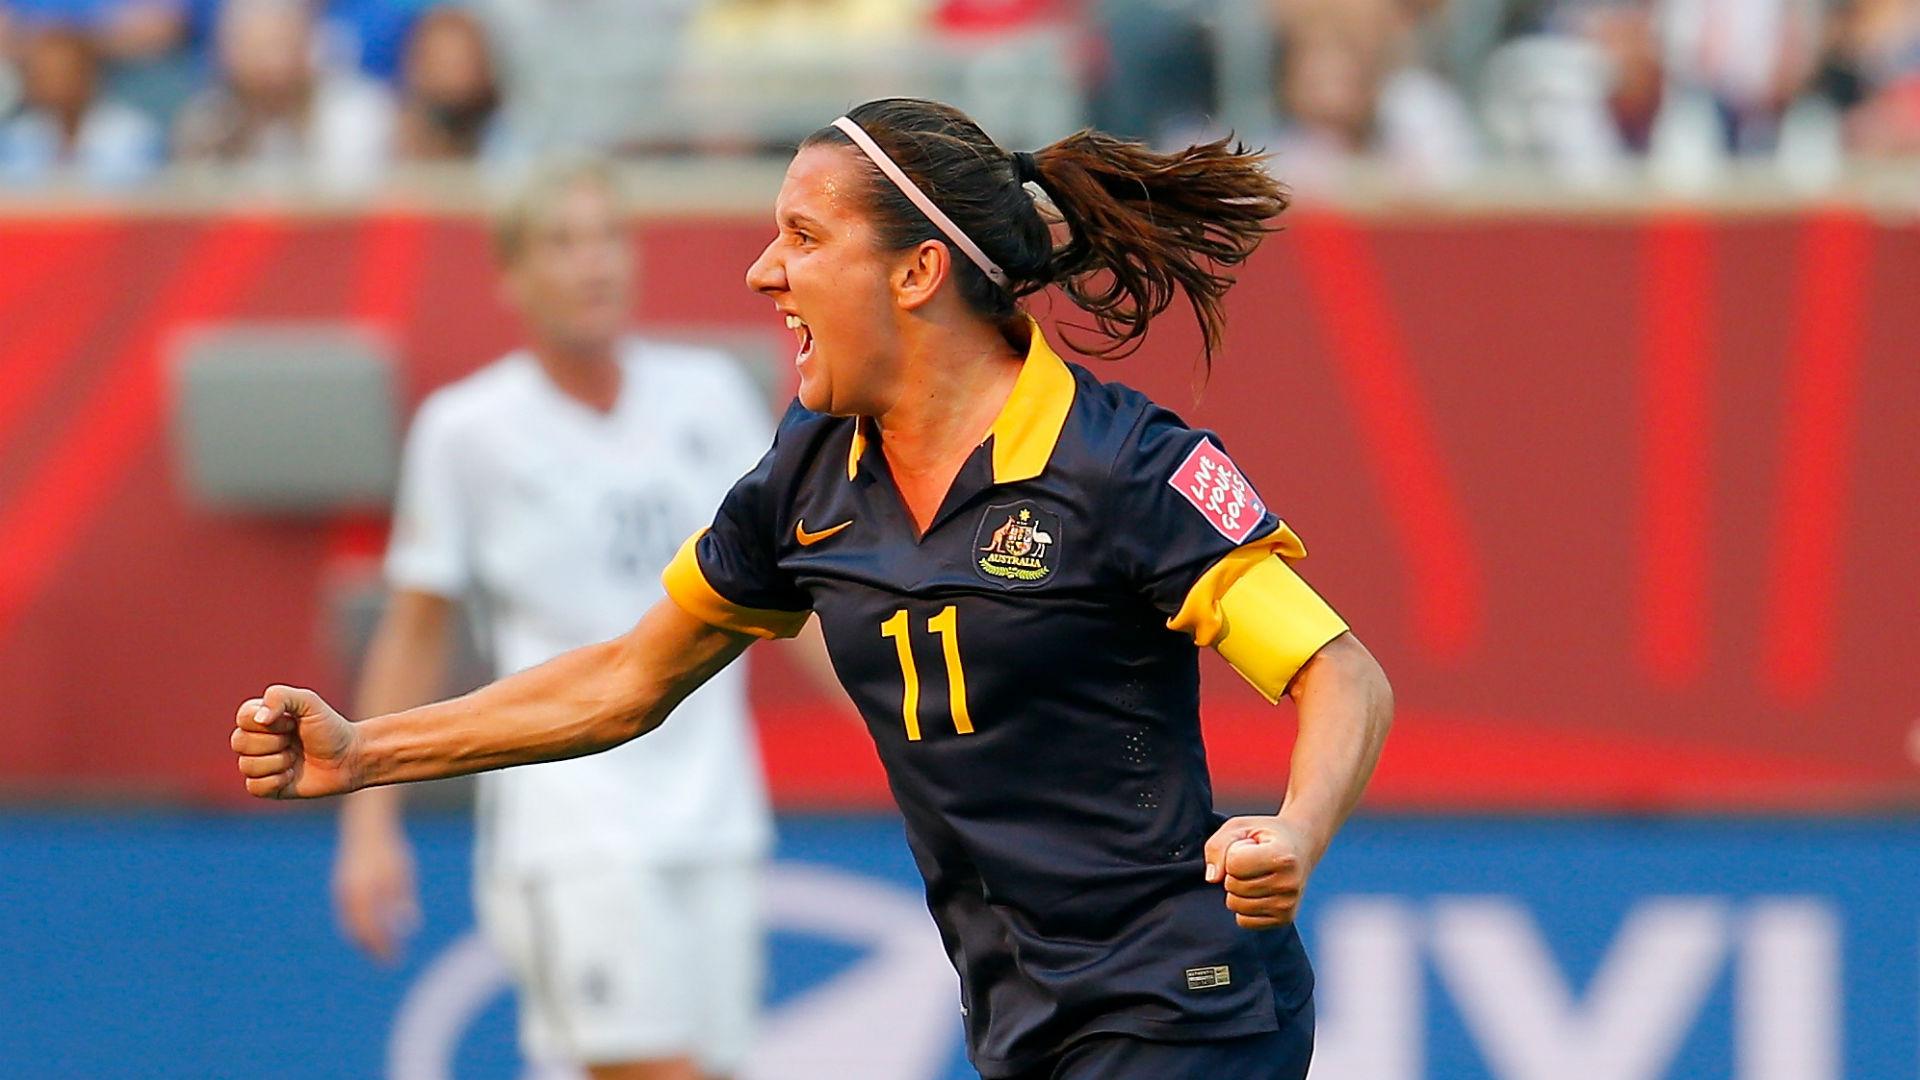 Australia women's soccer team faces unfair global backlash after